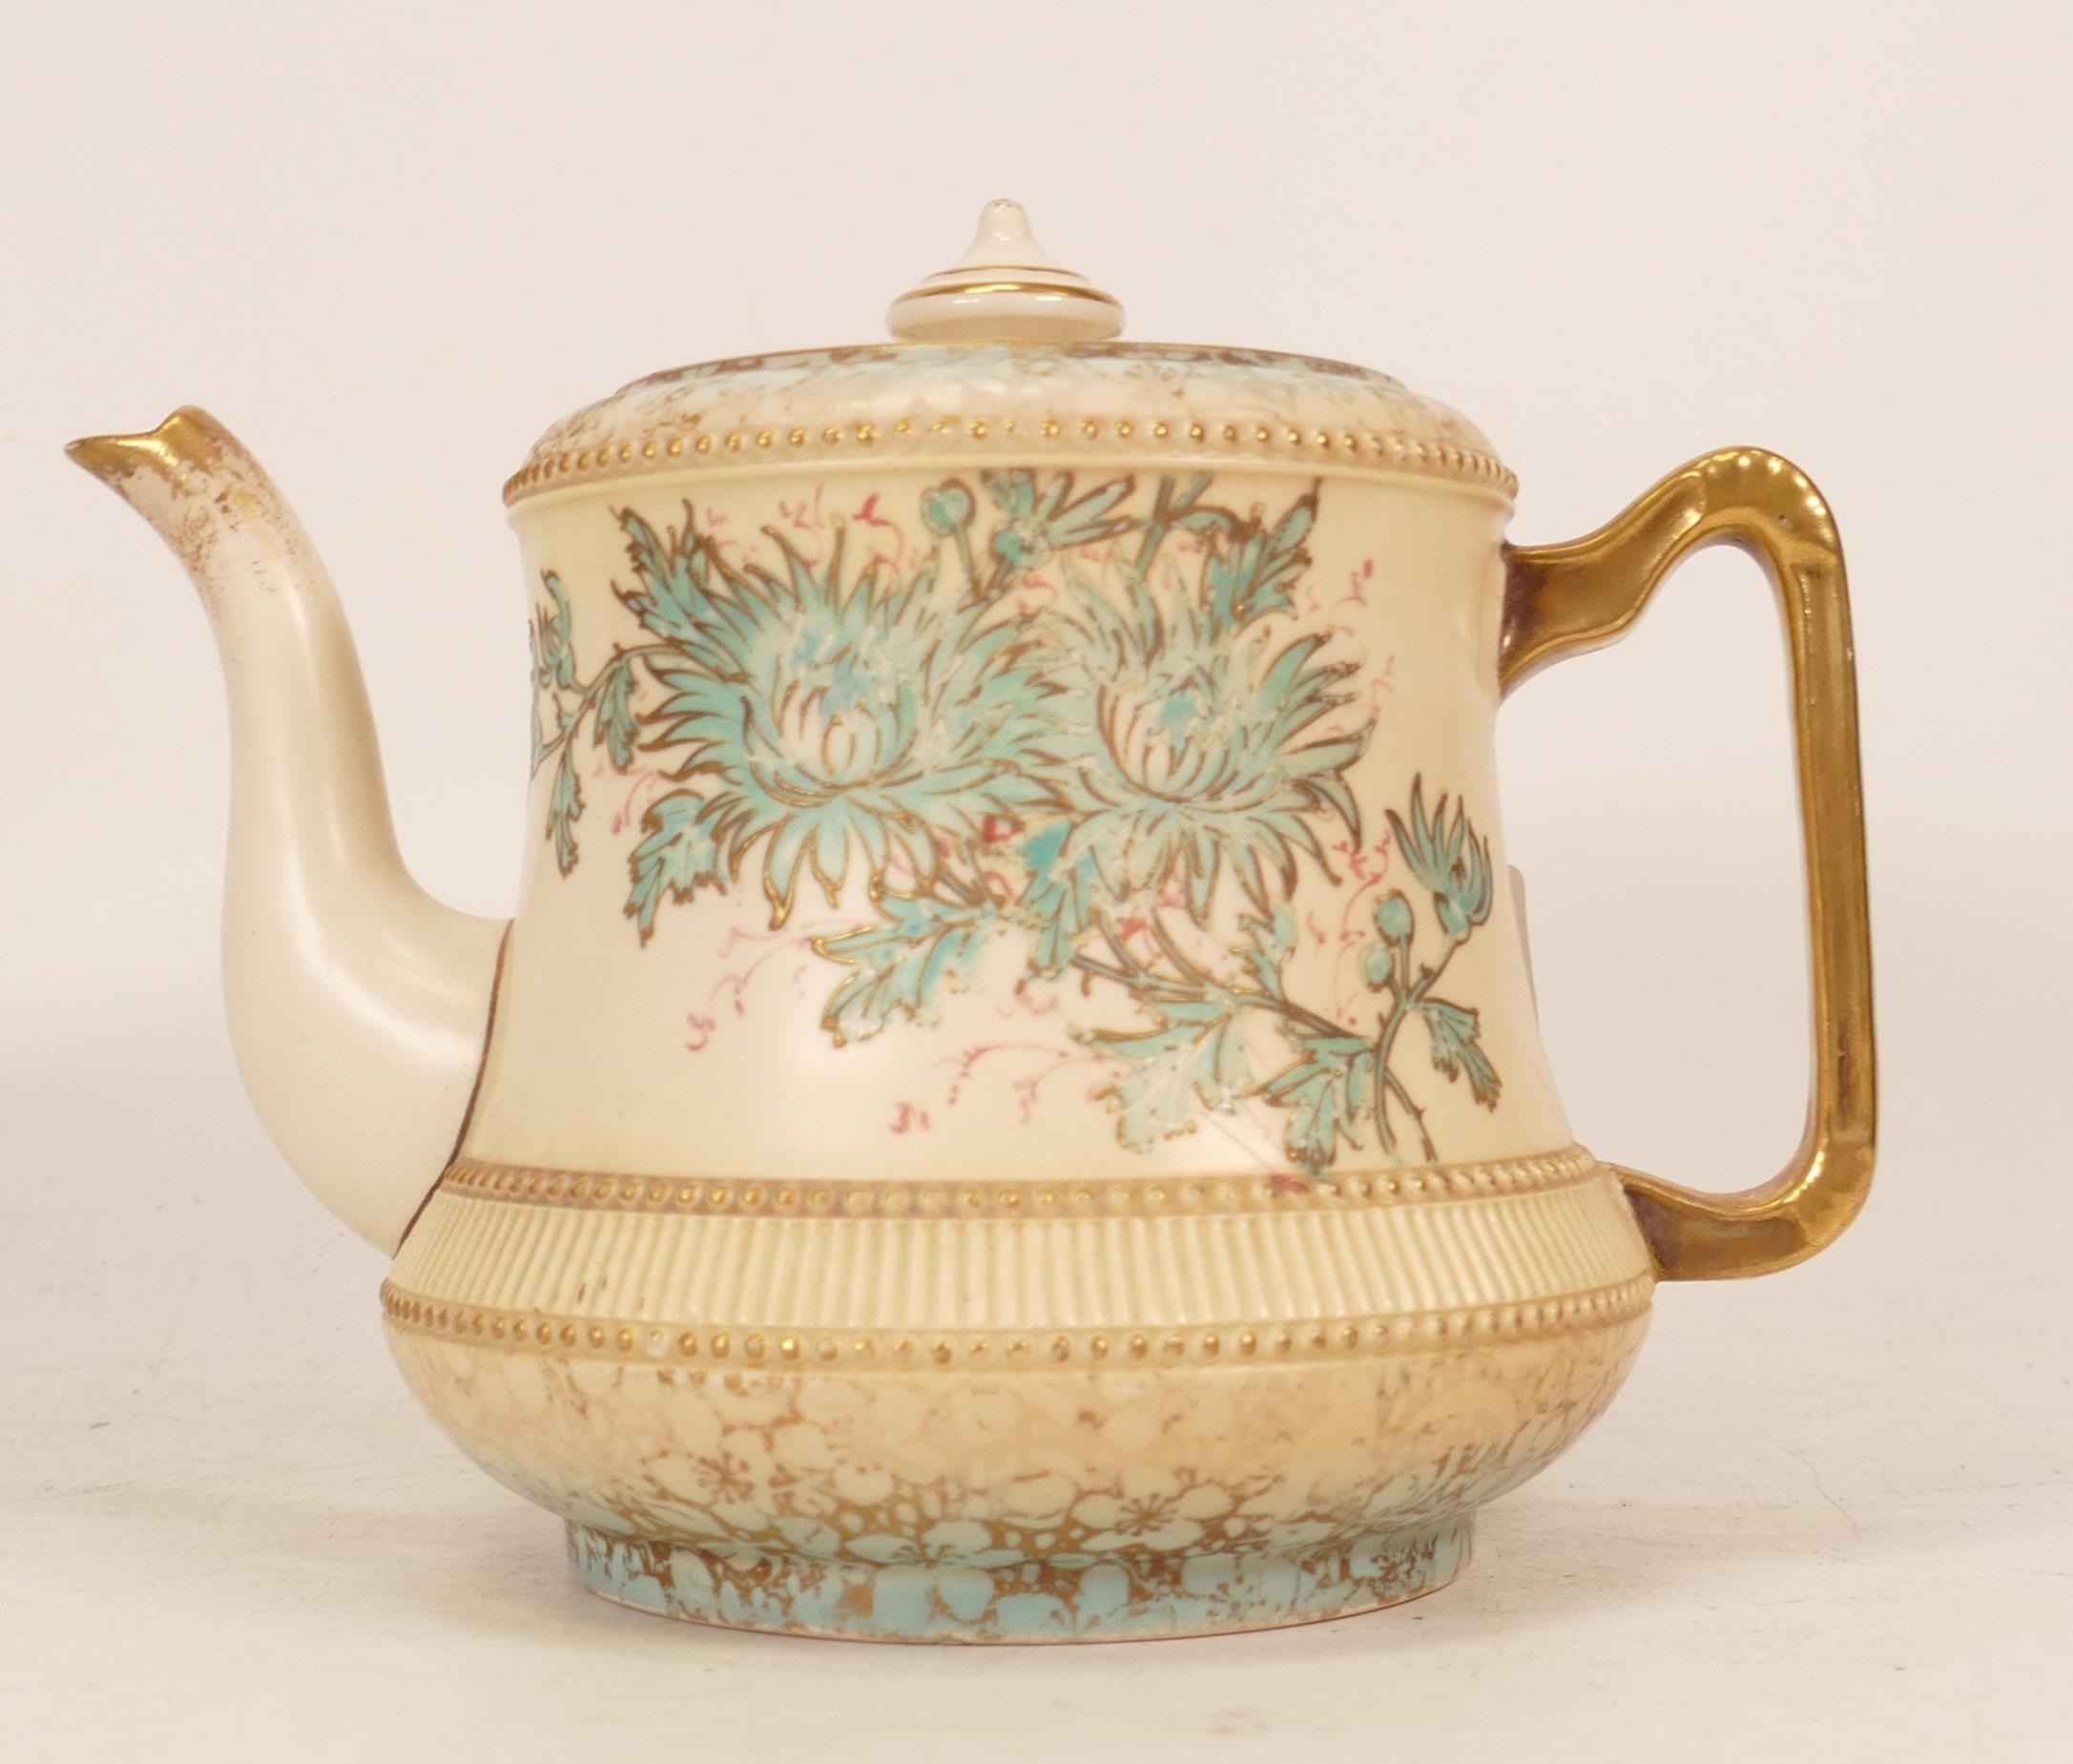 Carlton Ware Dahlia teapot